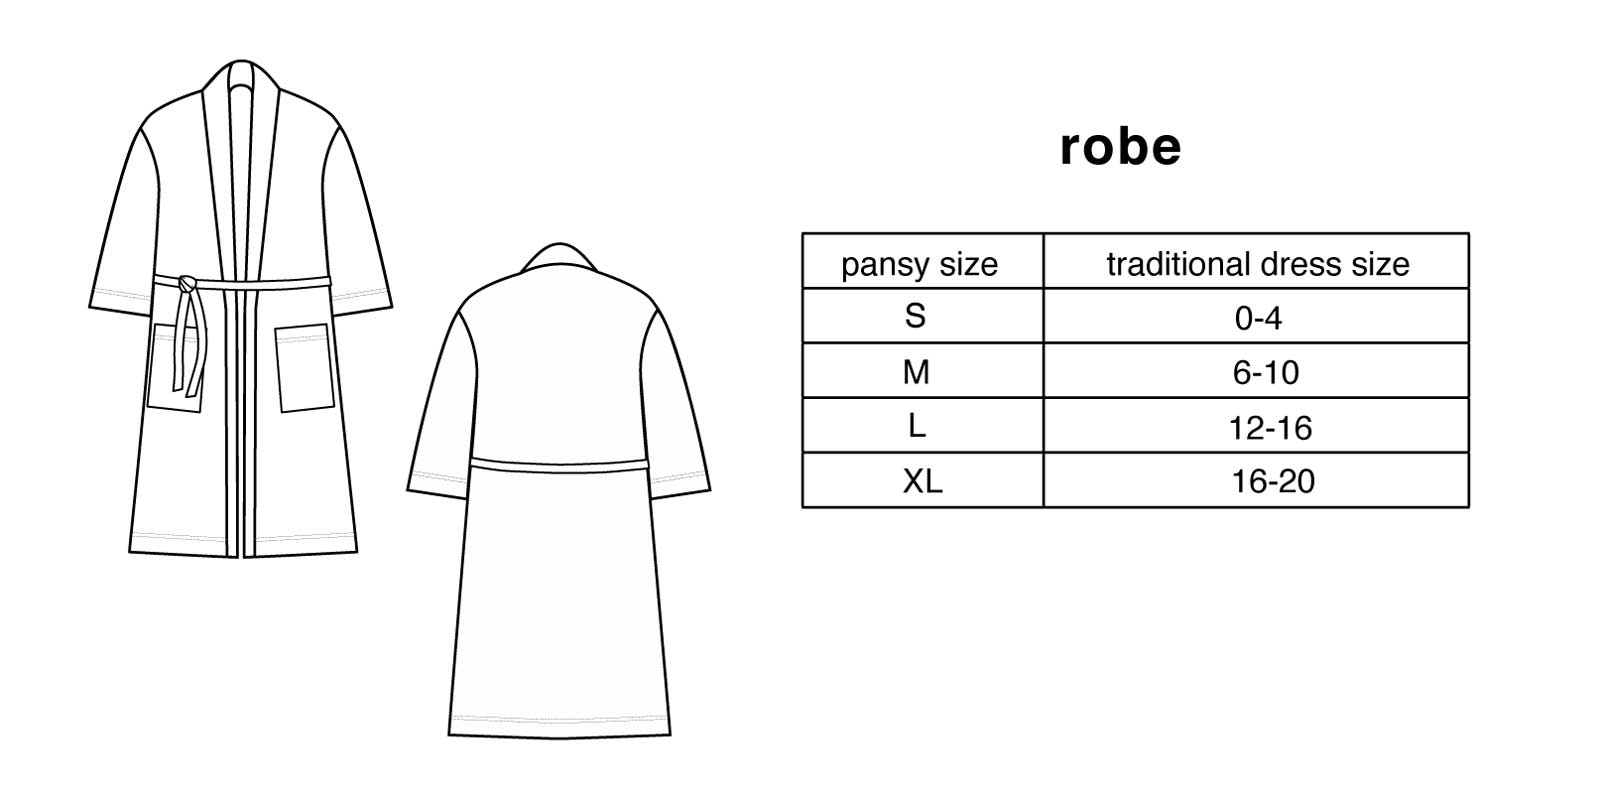 pansy robe sizing